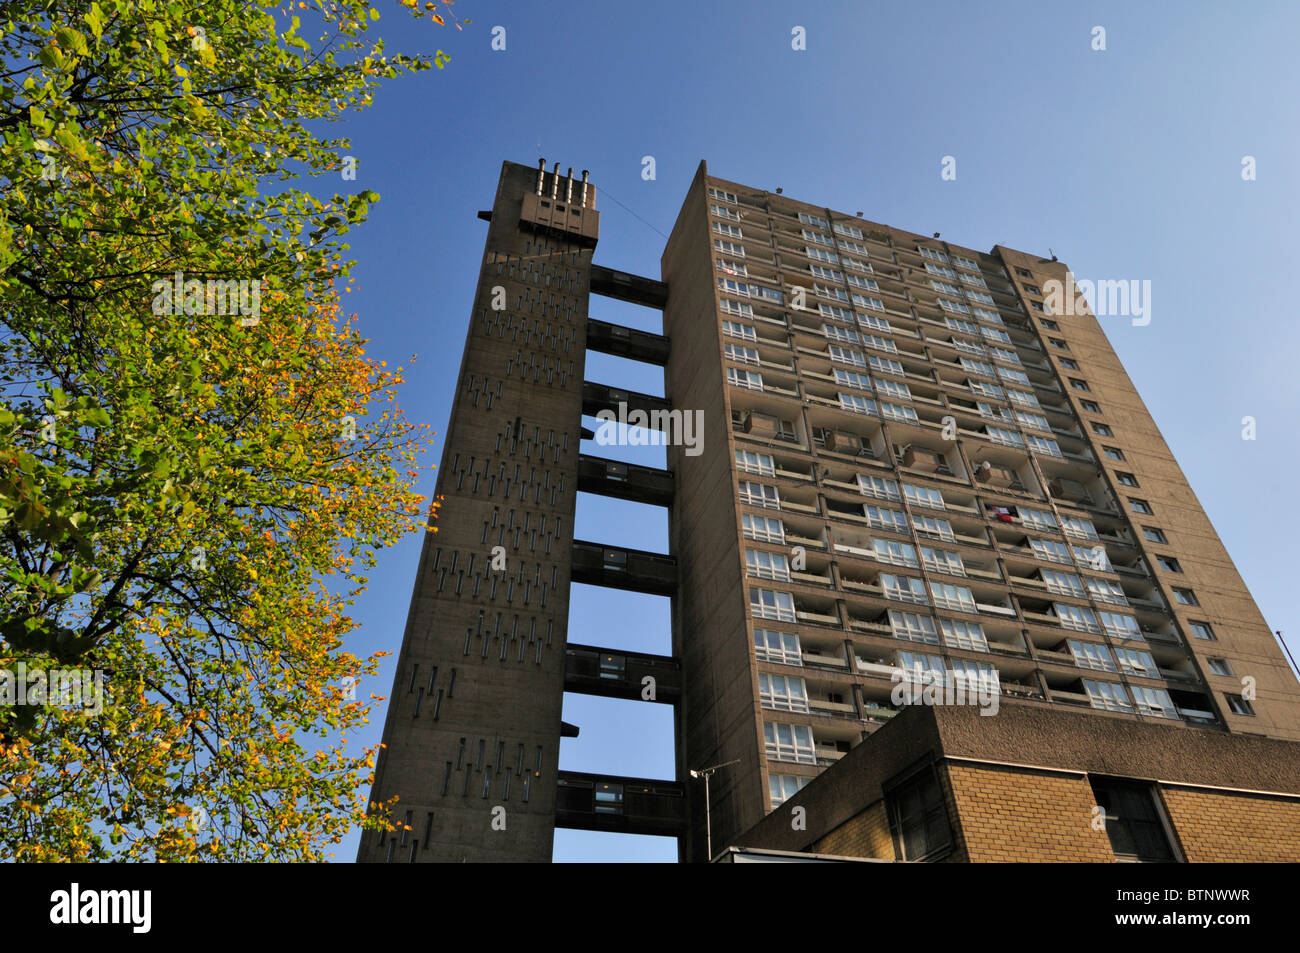 Balfron Tower, Brownfield social housing estate, Poplar, Tower Hamlets, East London E14, United Kingdom Stock Photo